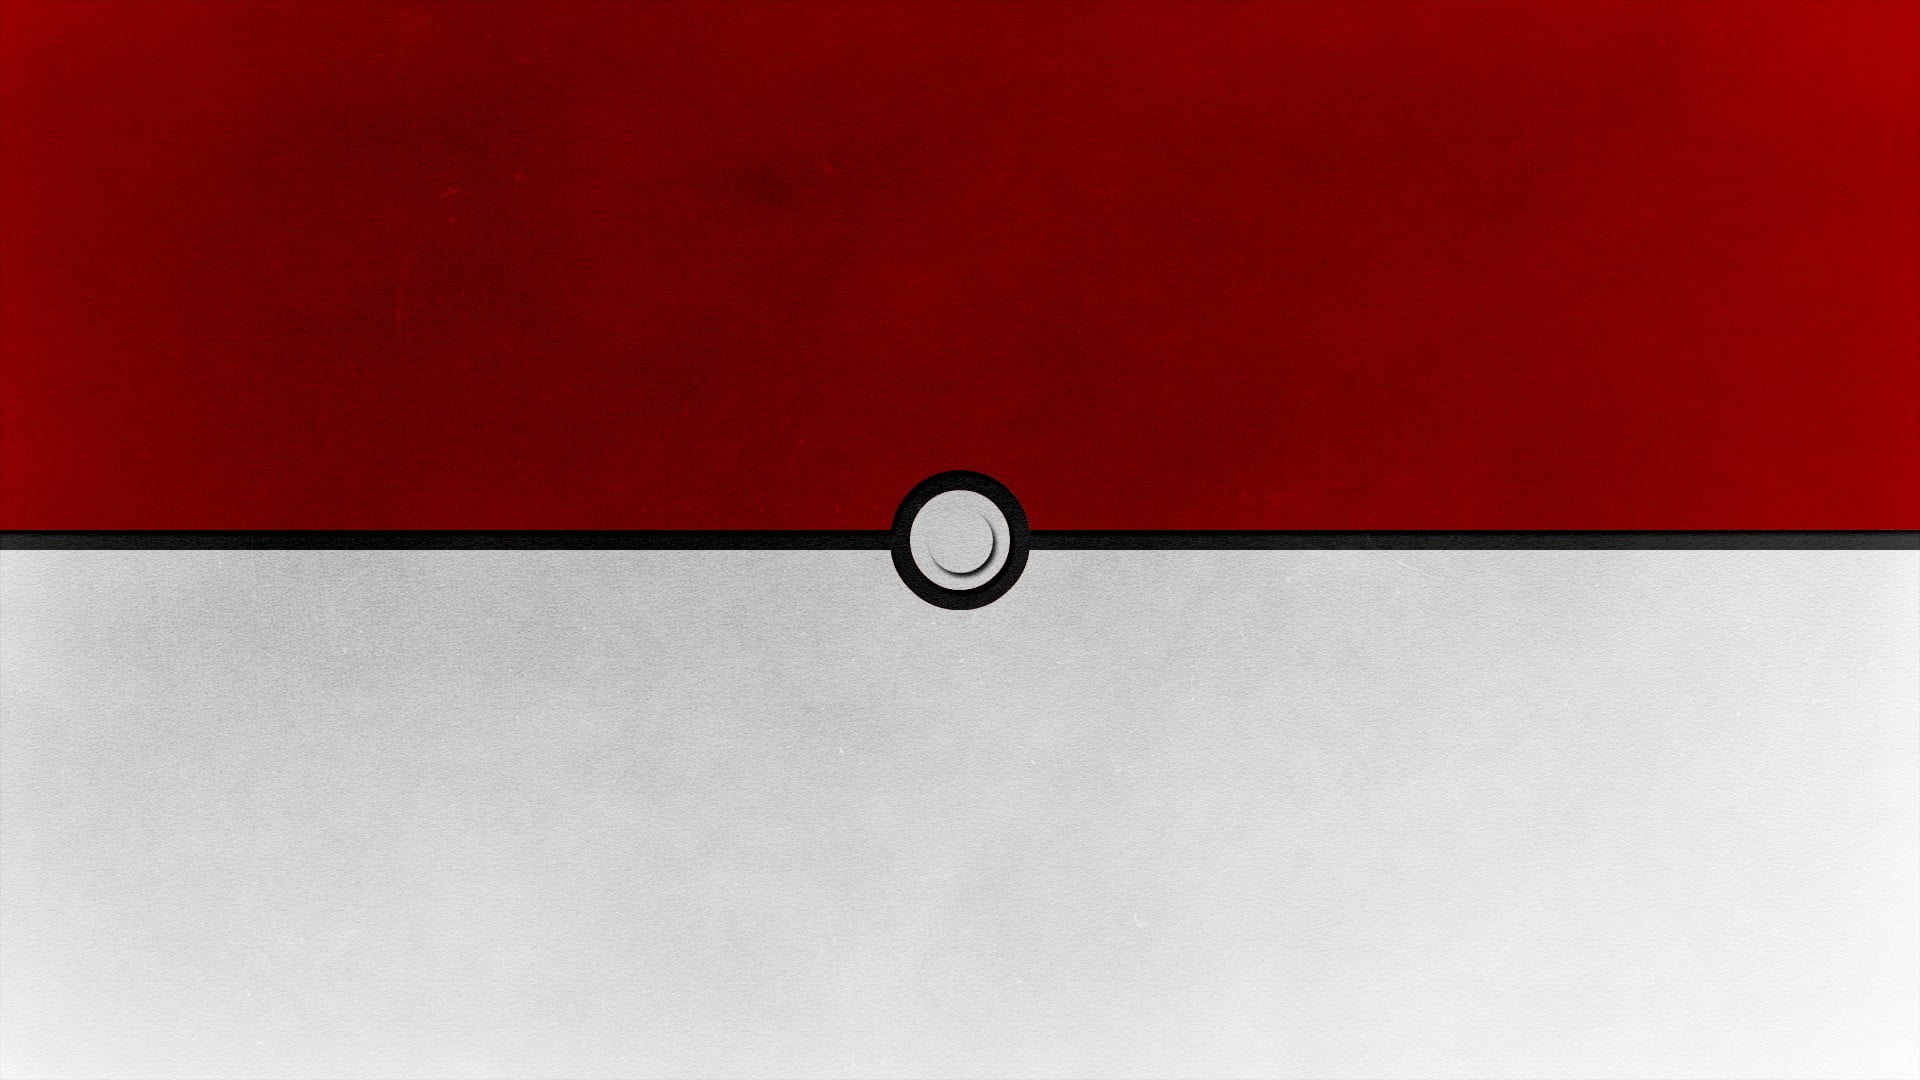 Pokemon ball wallpaper, minimalism, logo, no people, copy space